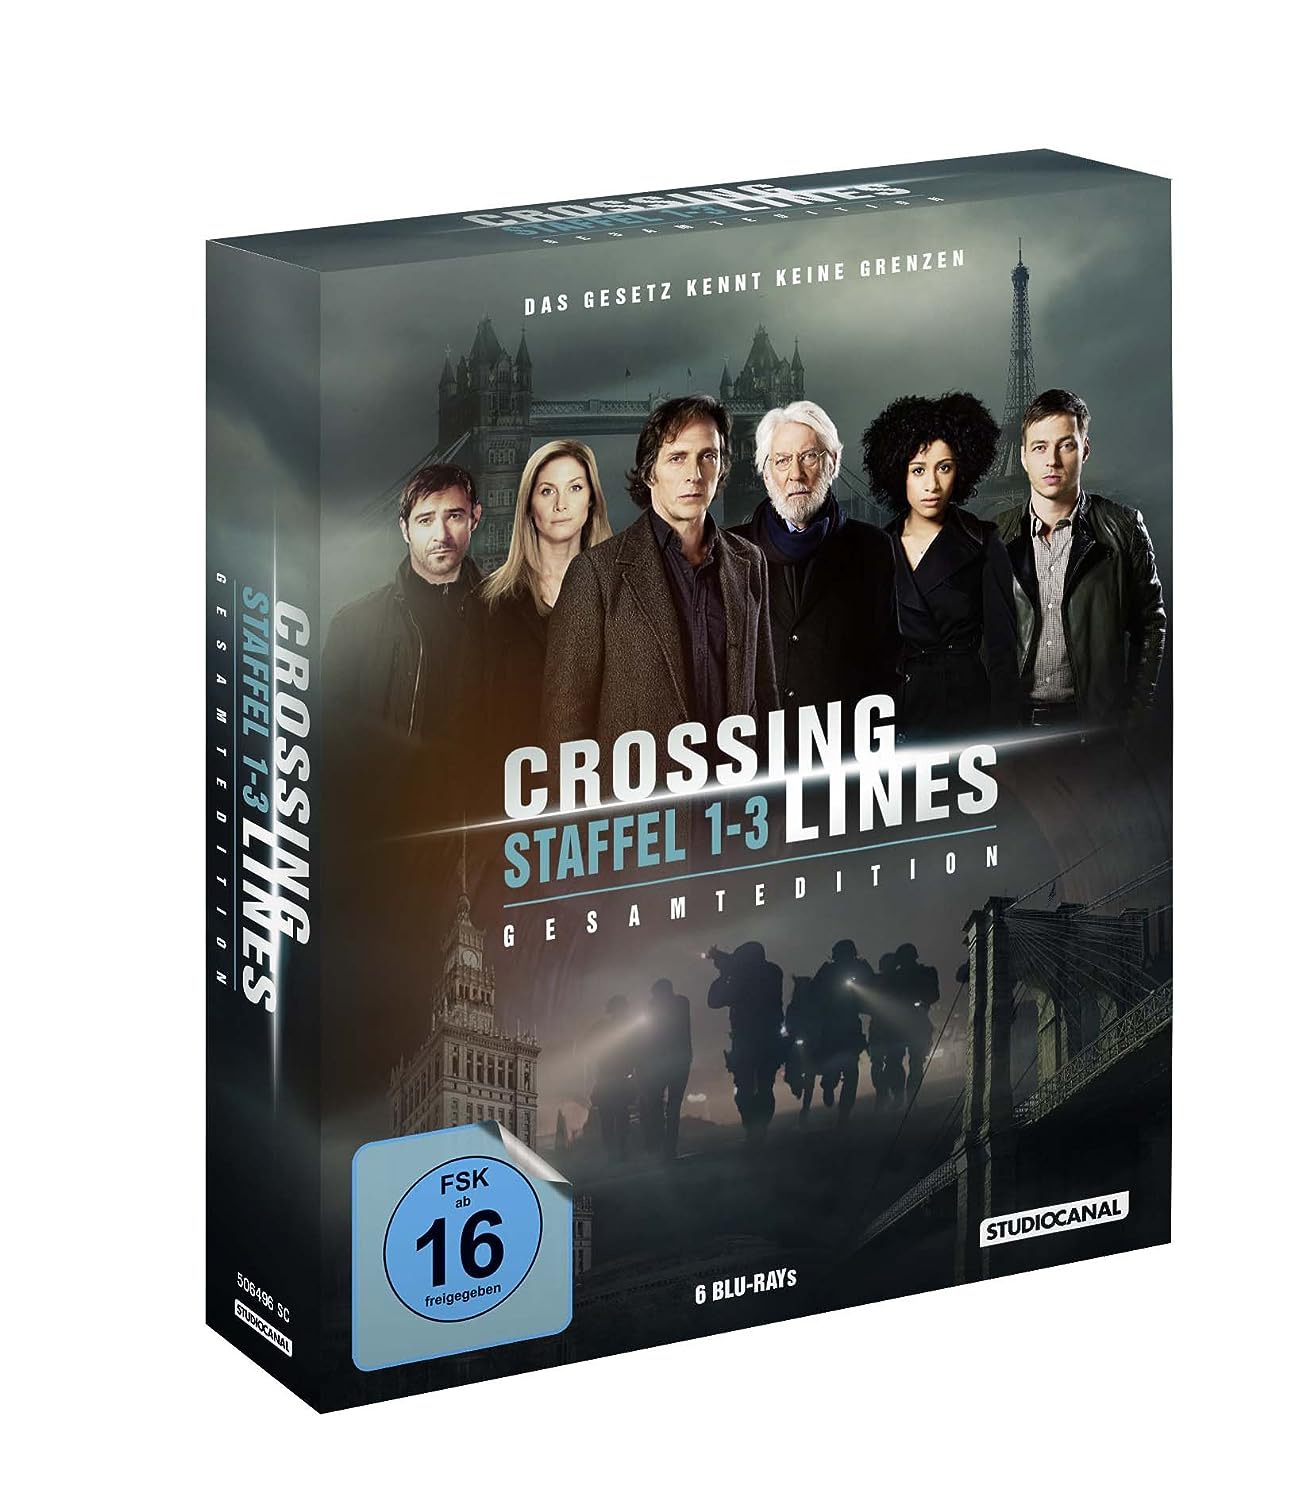 Crossing Lines - Staffel 1-3 - Gesamtedition (6 Blu-rays) Image 2